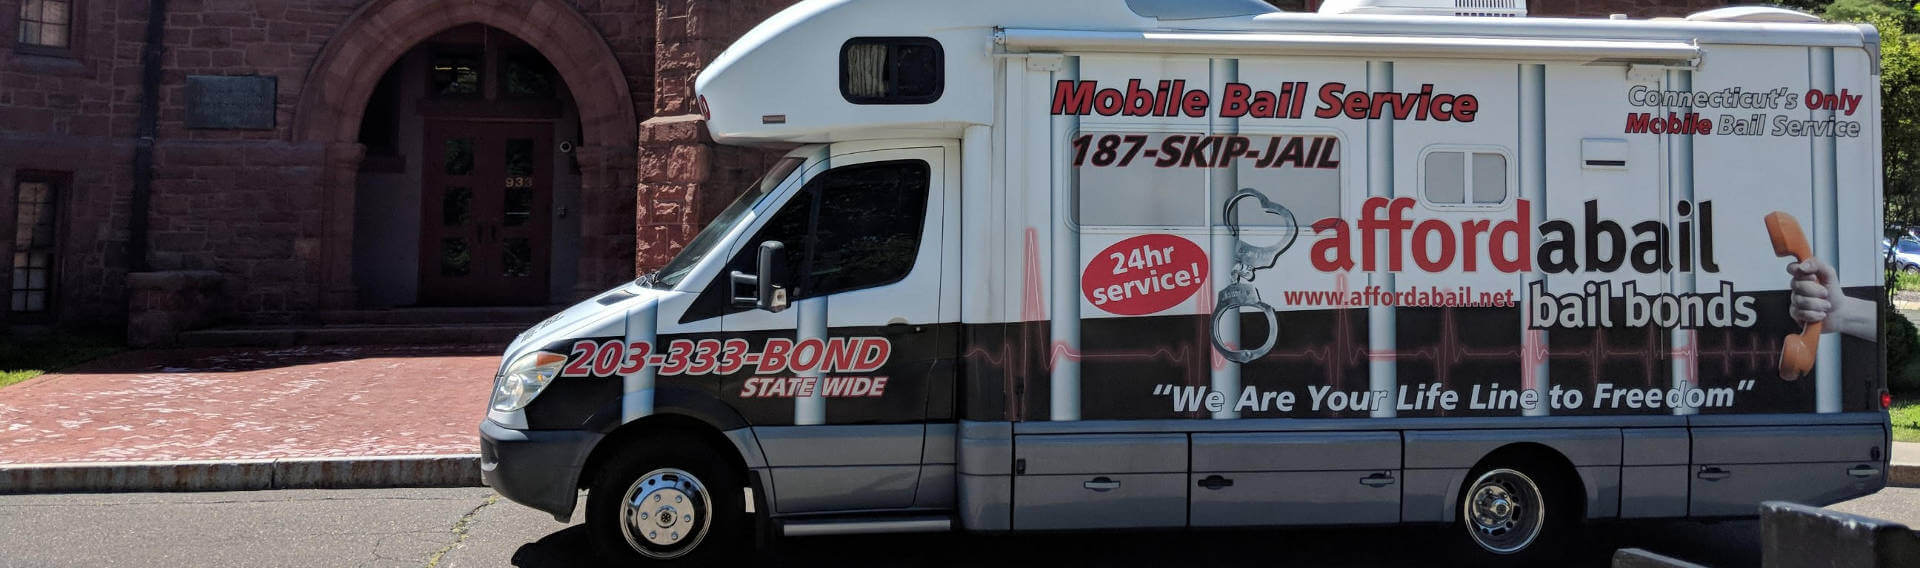 Mobile bail bonds service in Waterbury CT